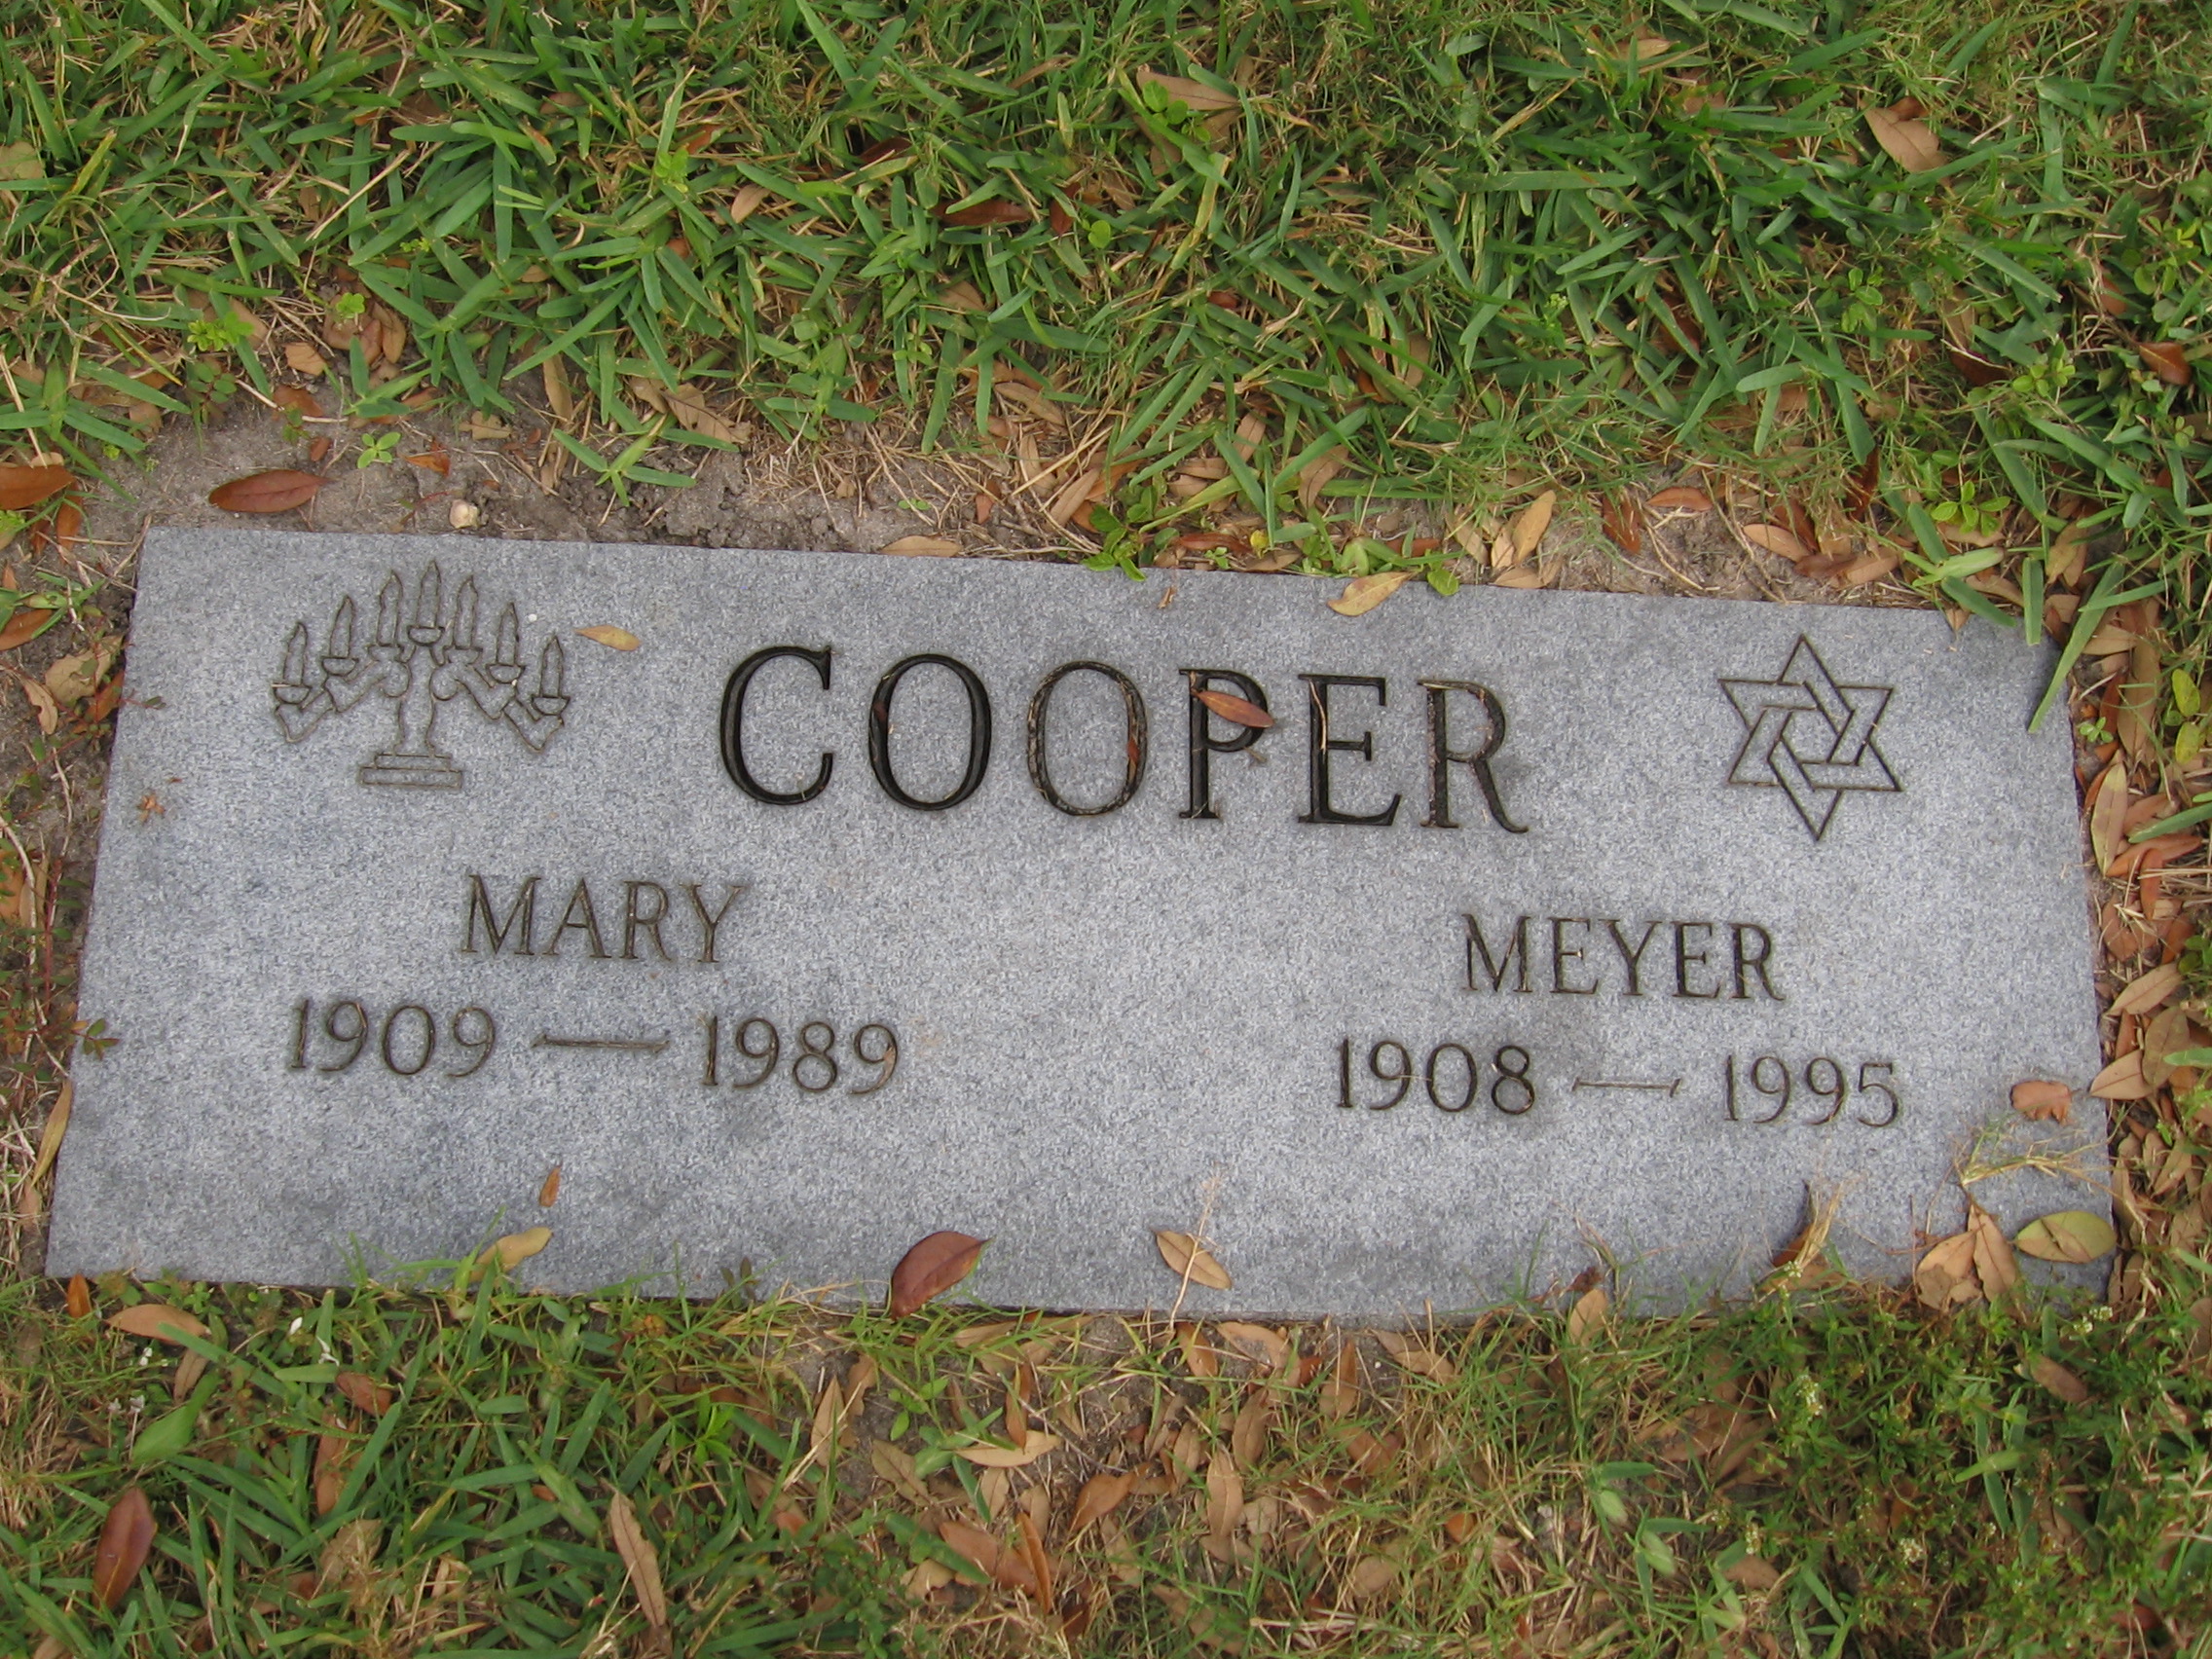 Meyer Cooper